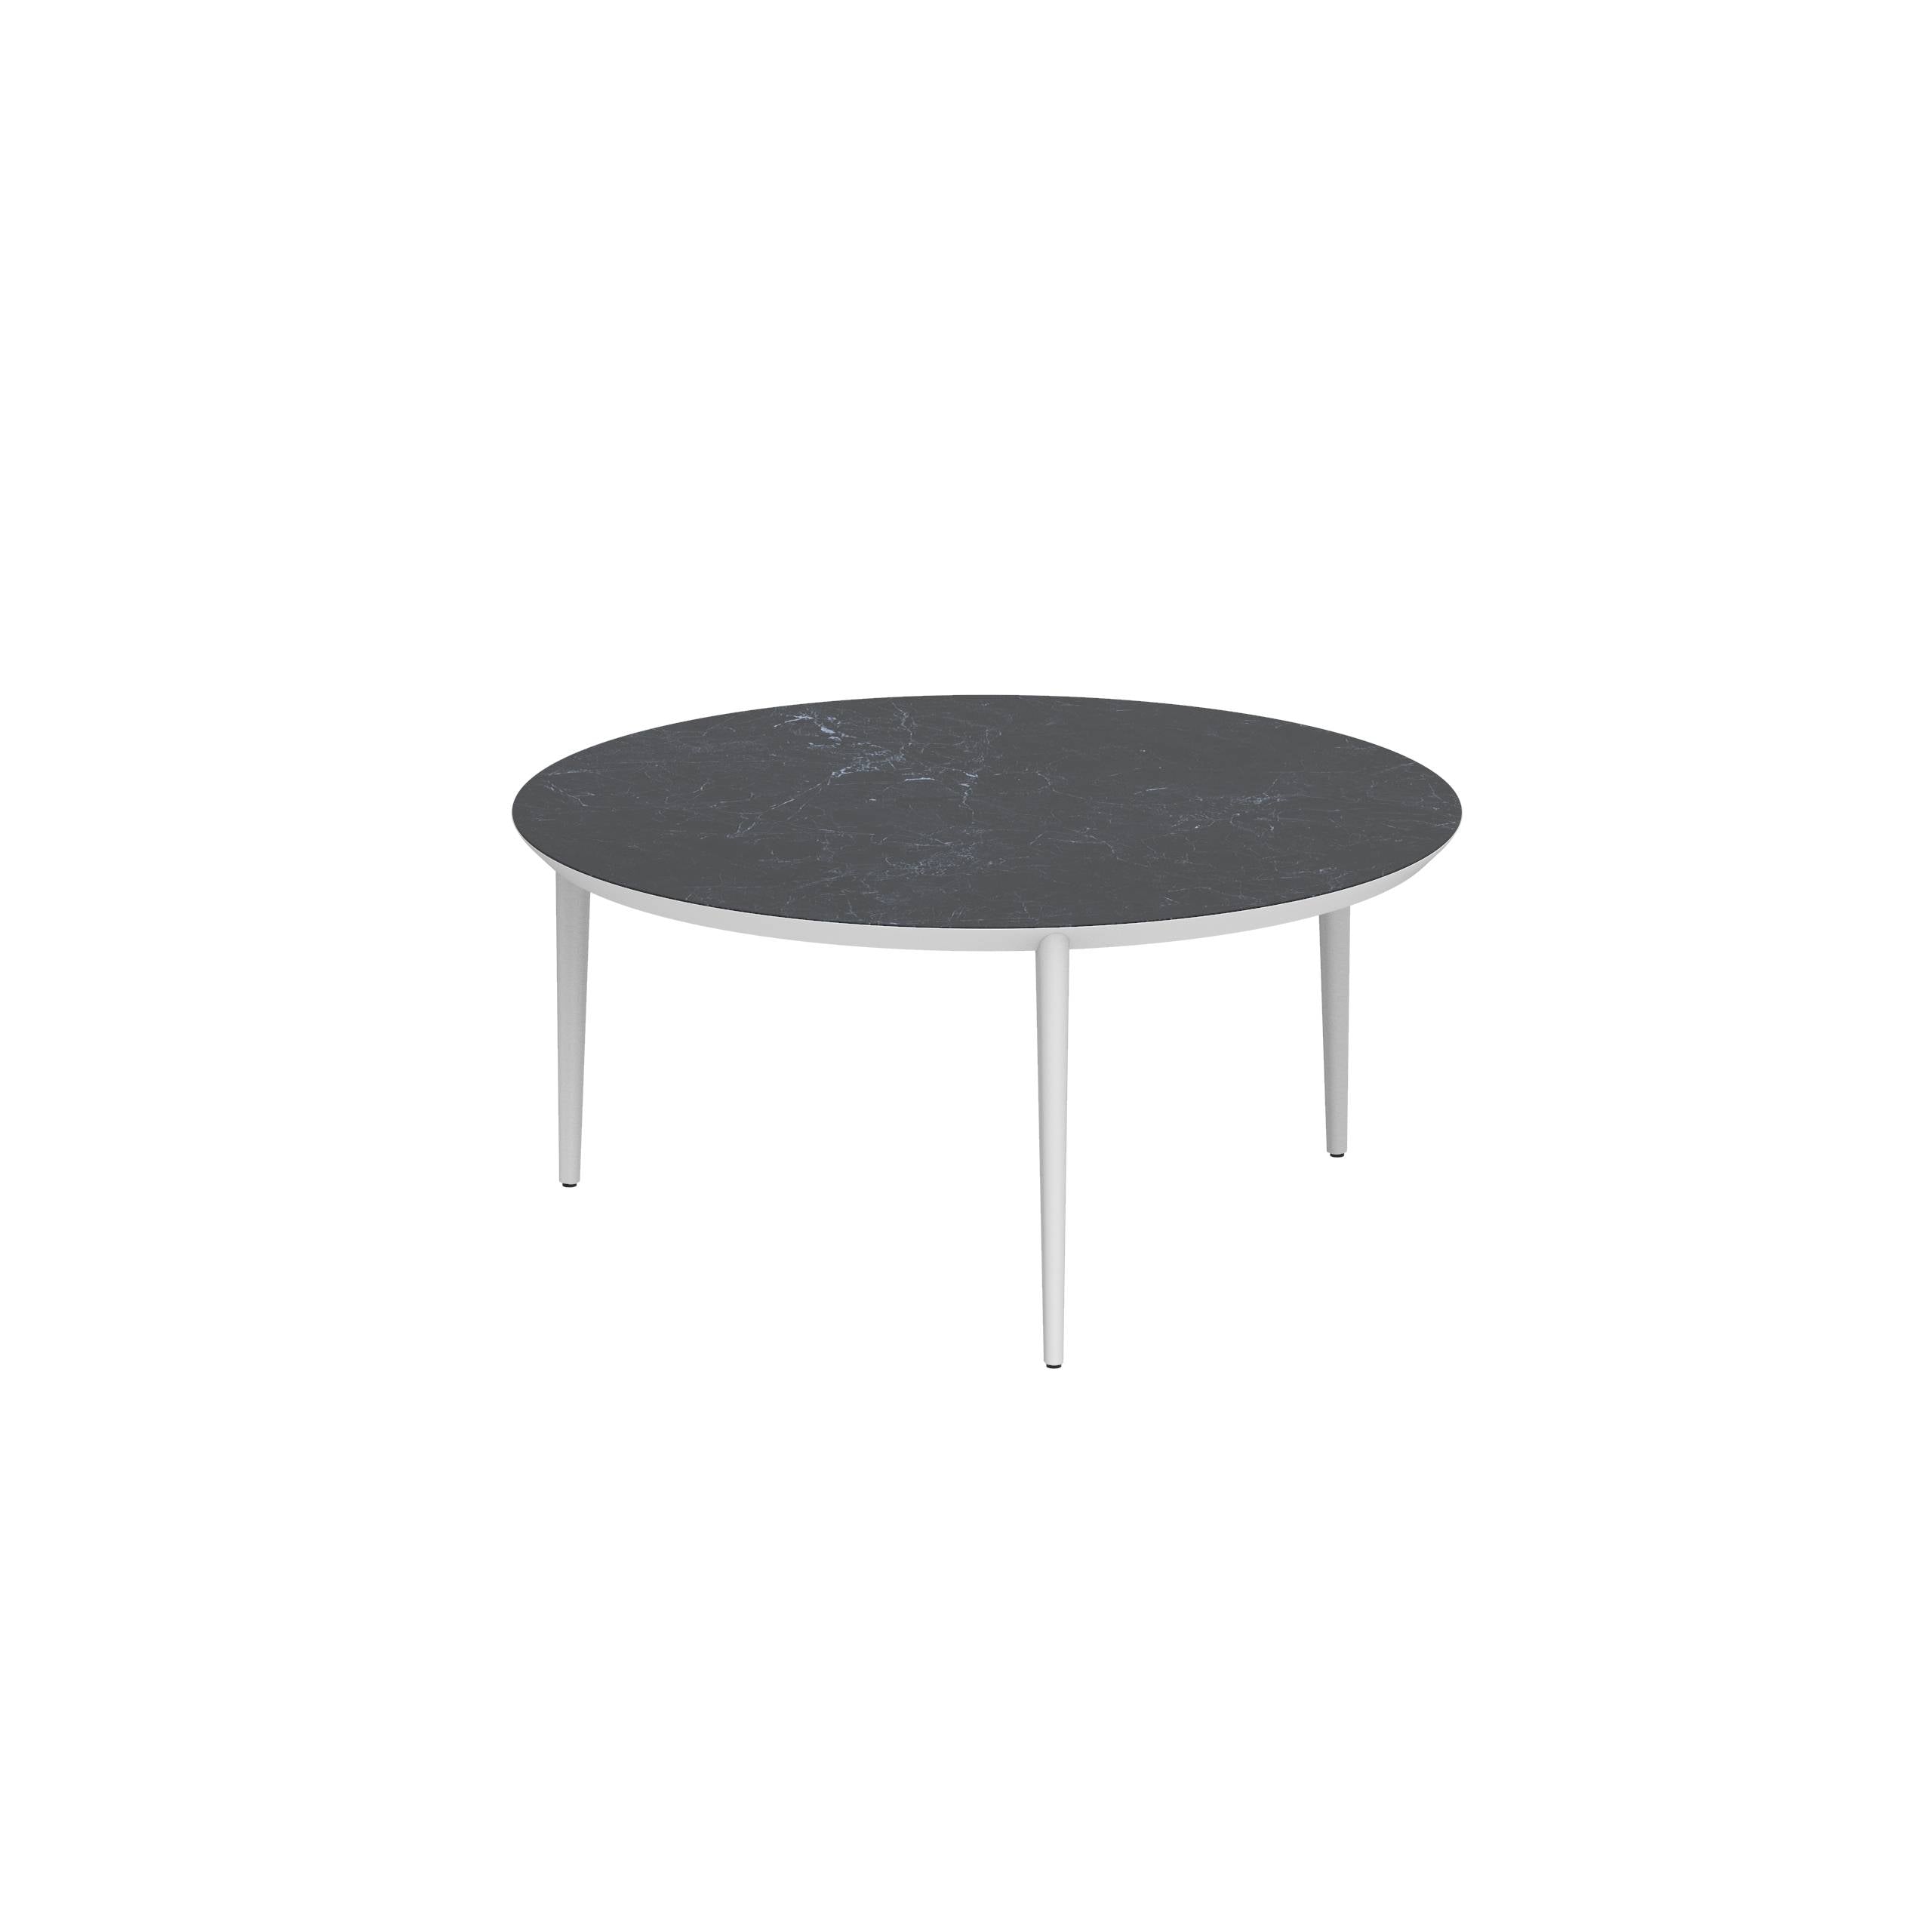 U-Nite Table Round Ø 160cm Alu Legs White - Table Top Ceramic Nero Marquina